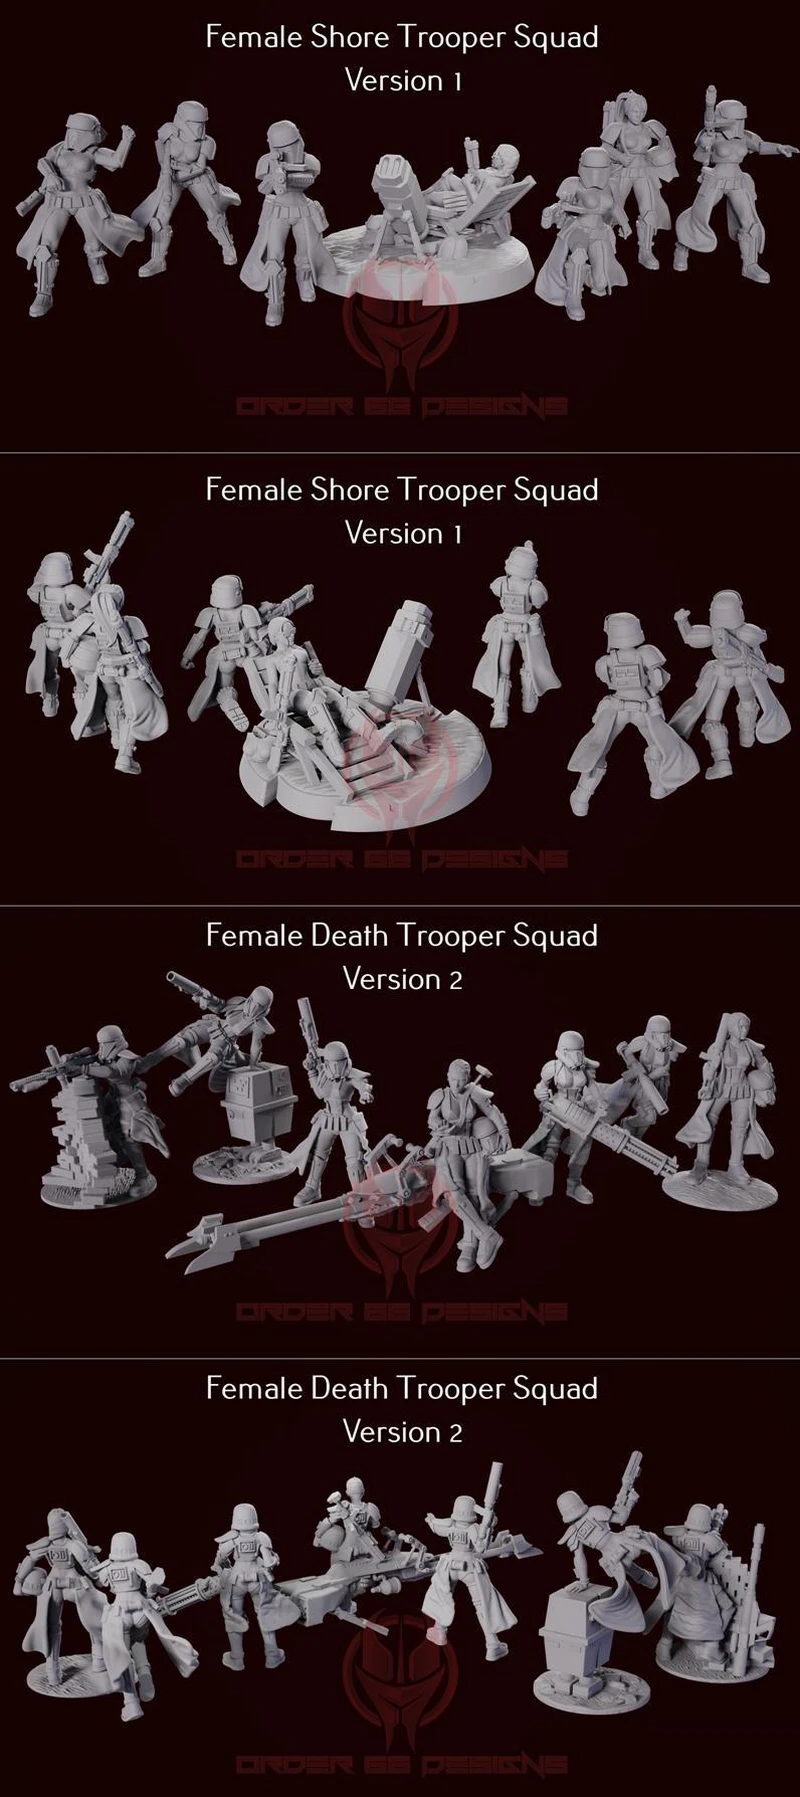 Female Shore Trooper Squad V1 and Female Death Trooper Squad V2